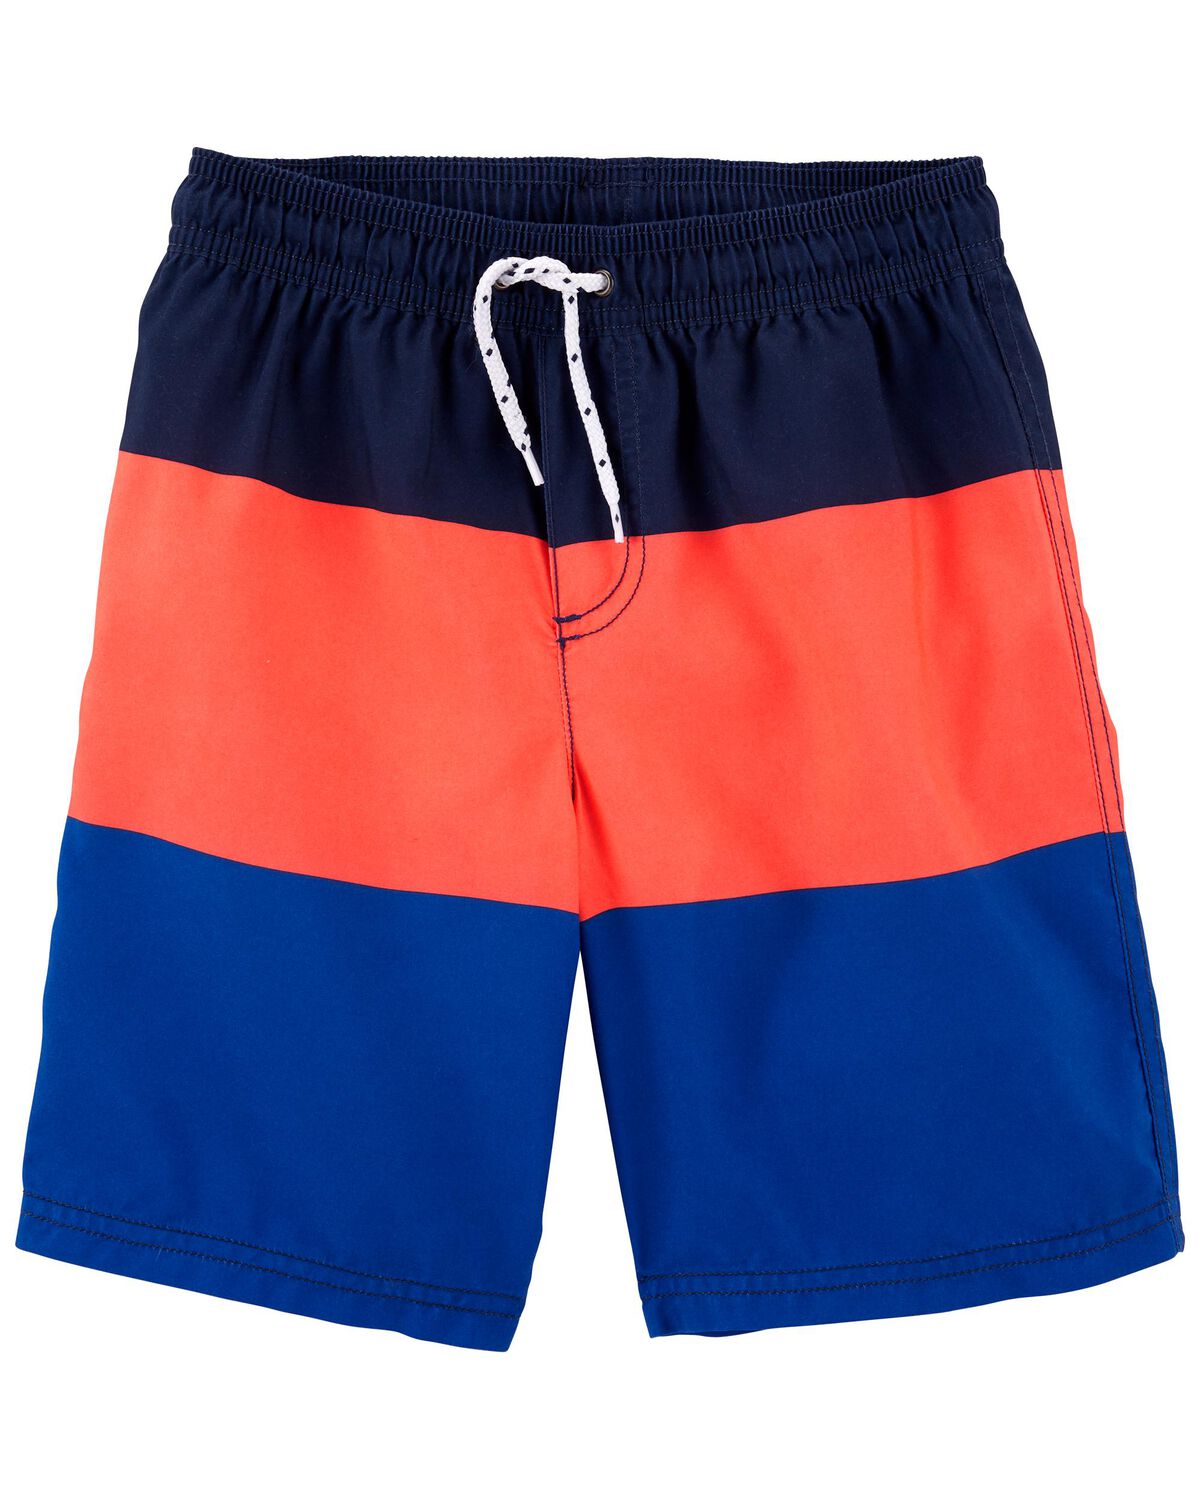 Blue/Orange Kid Colorblock Swim Trunks | carters.com